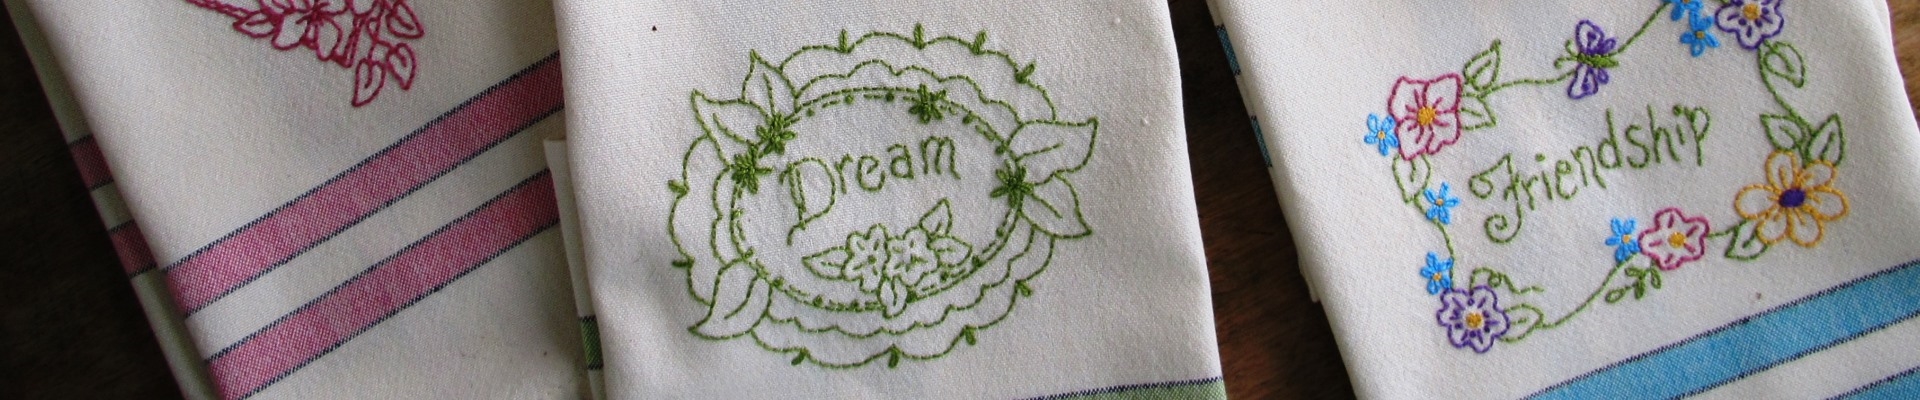 Love, Dream, Friendship Tea Towels